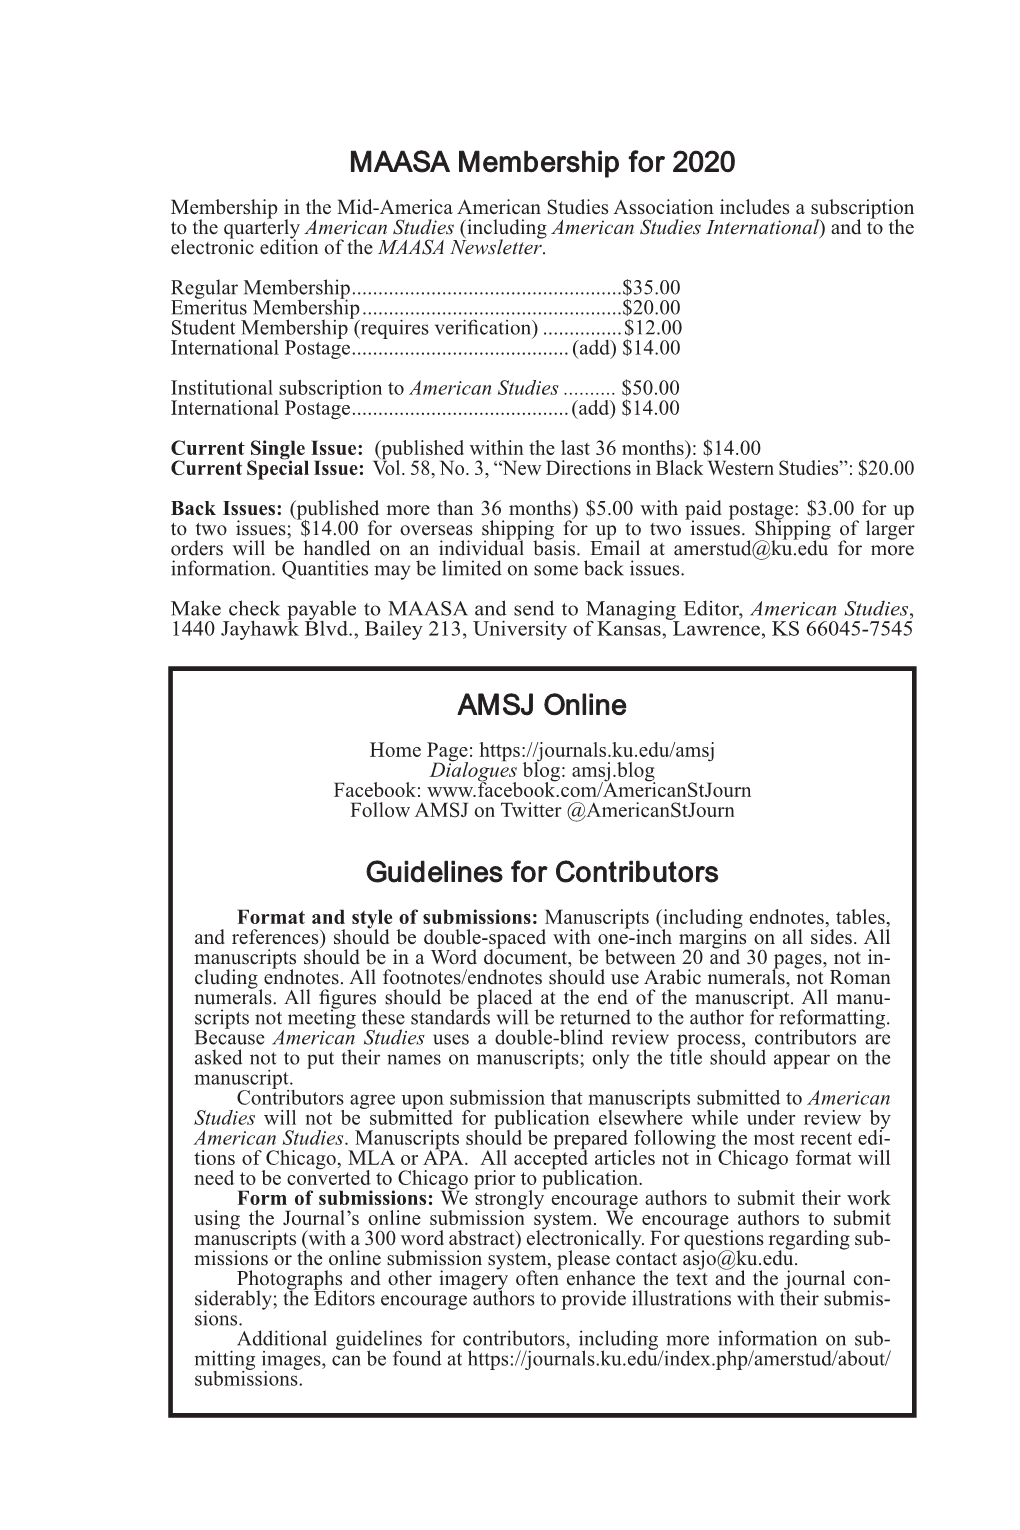 MAASA Membership for 2020 AMSJ Online Guidelines for Contributors